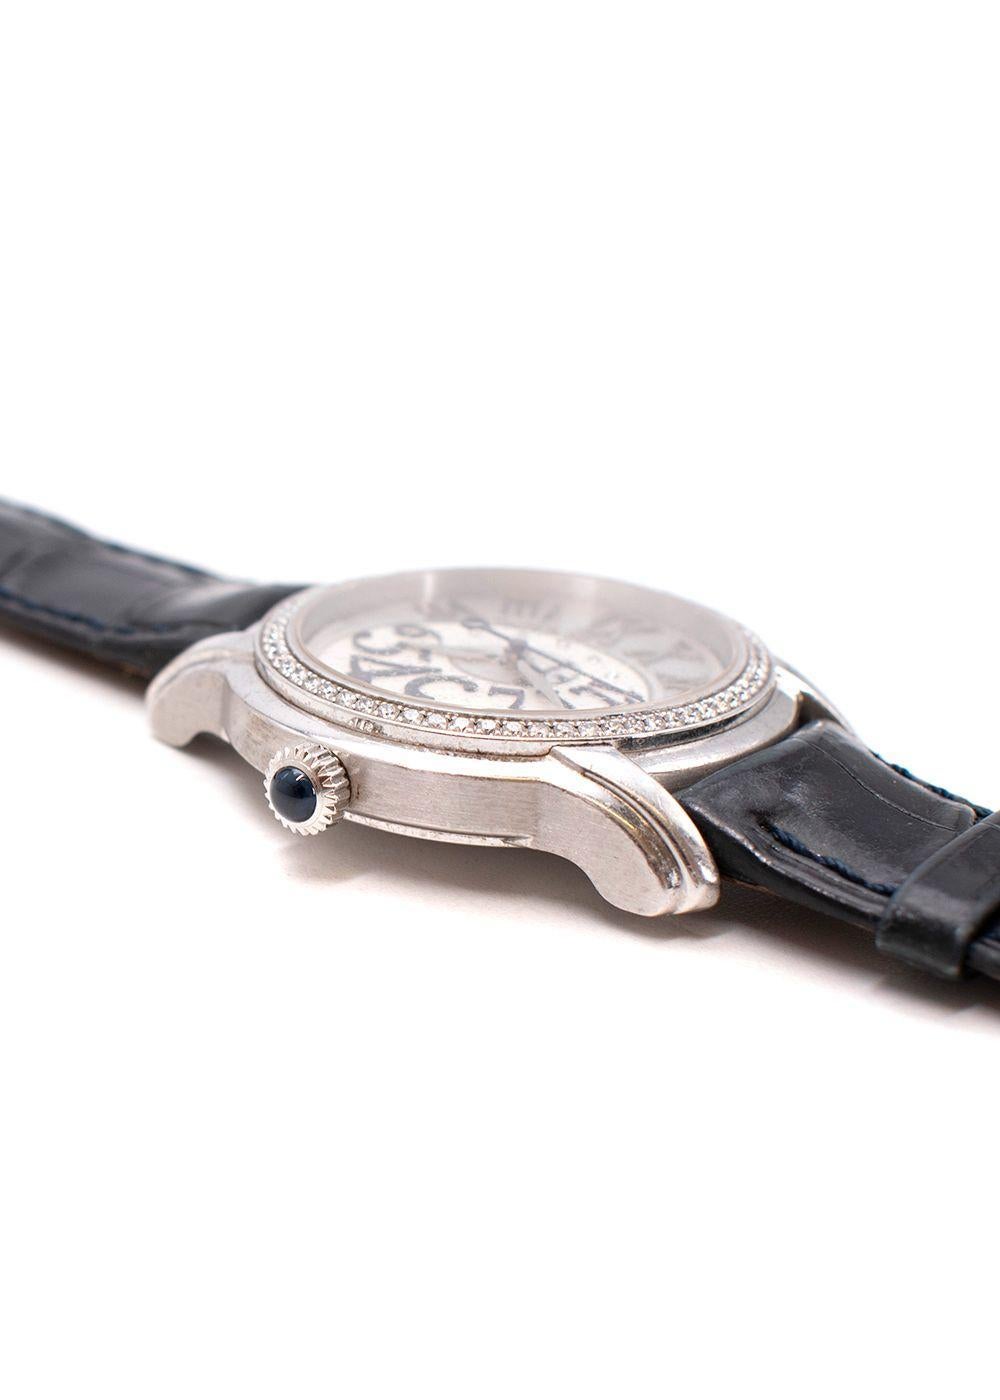 Audemars Piguet Diamond Set White Gold Millenary Watch & Croc Leather Strap 3